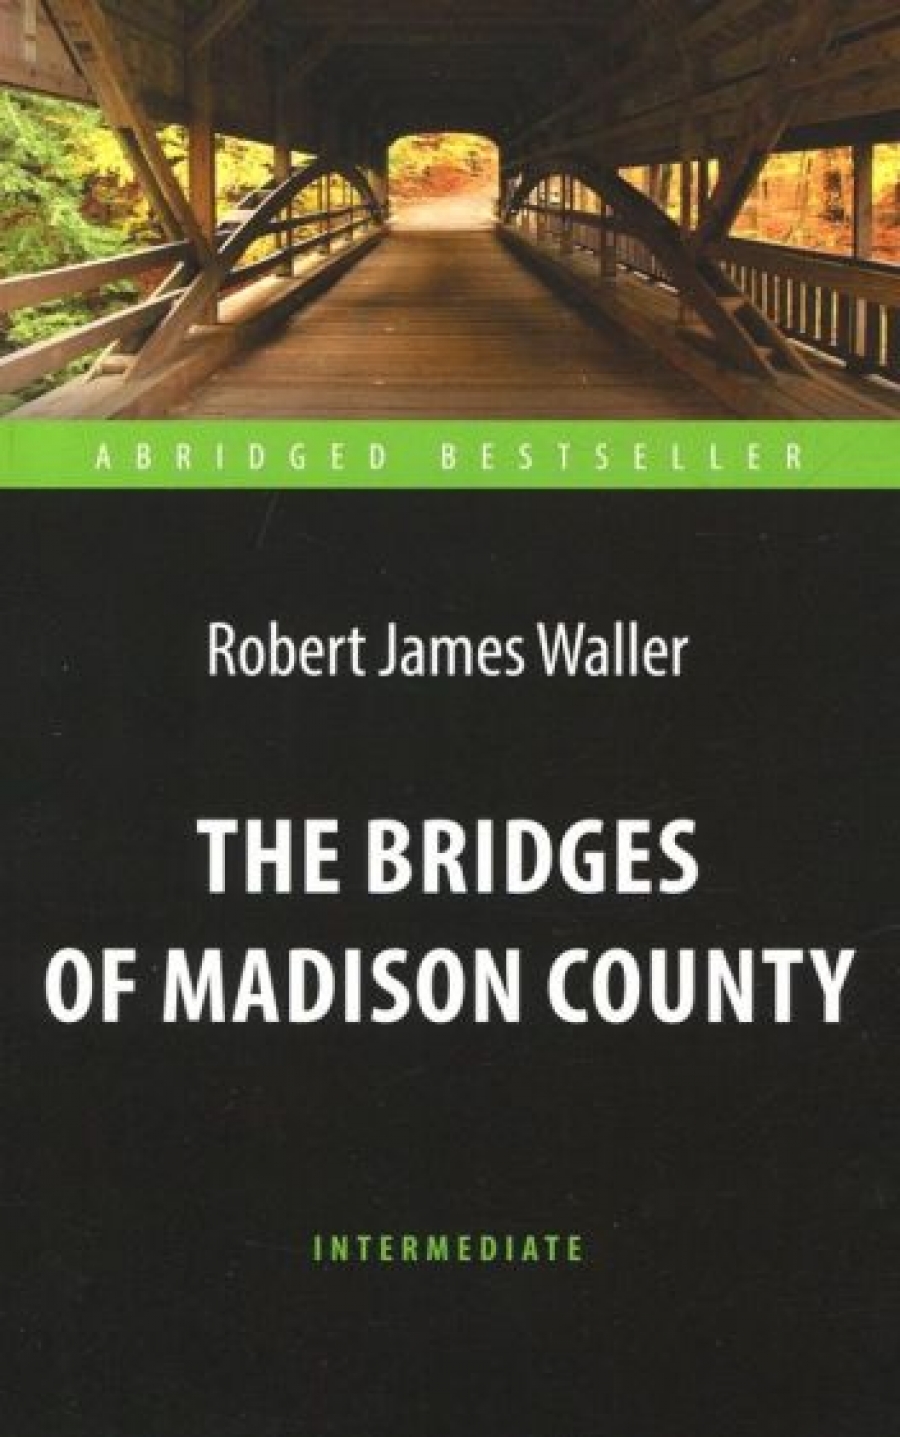  .. The Bridges of Madison County. Intermediate 